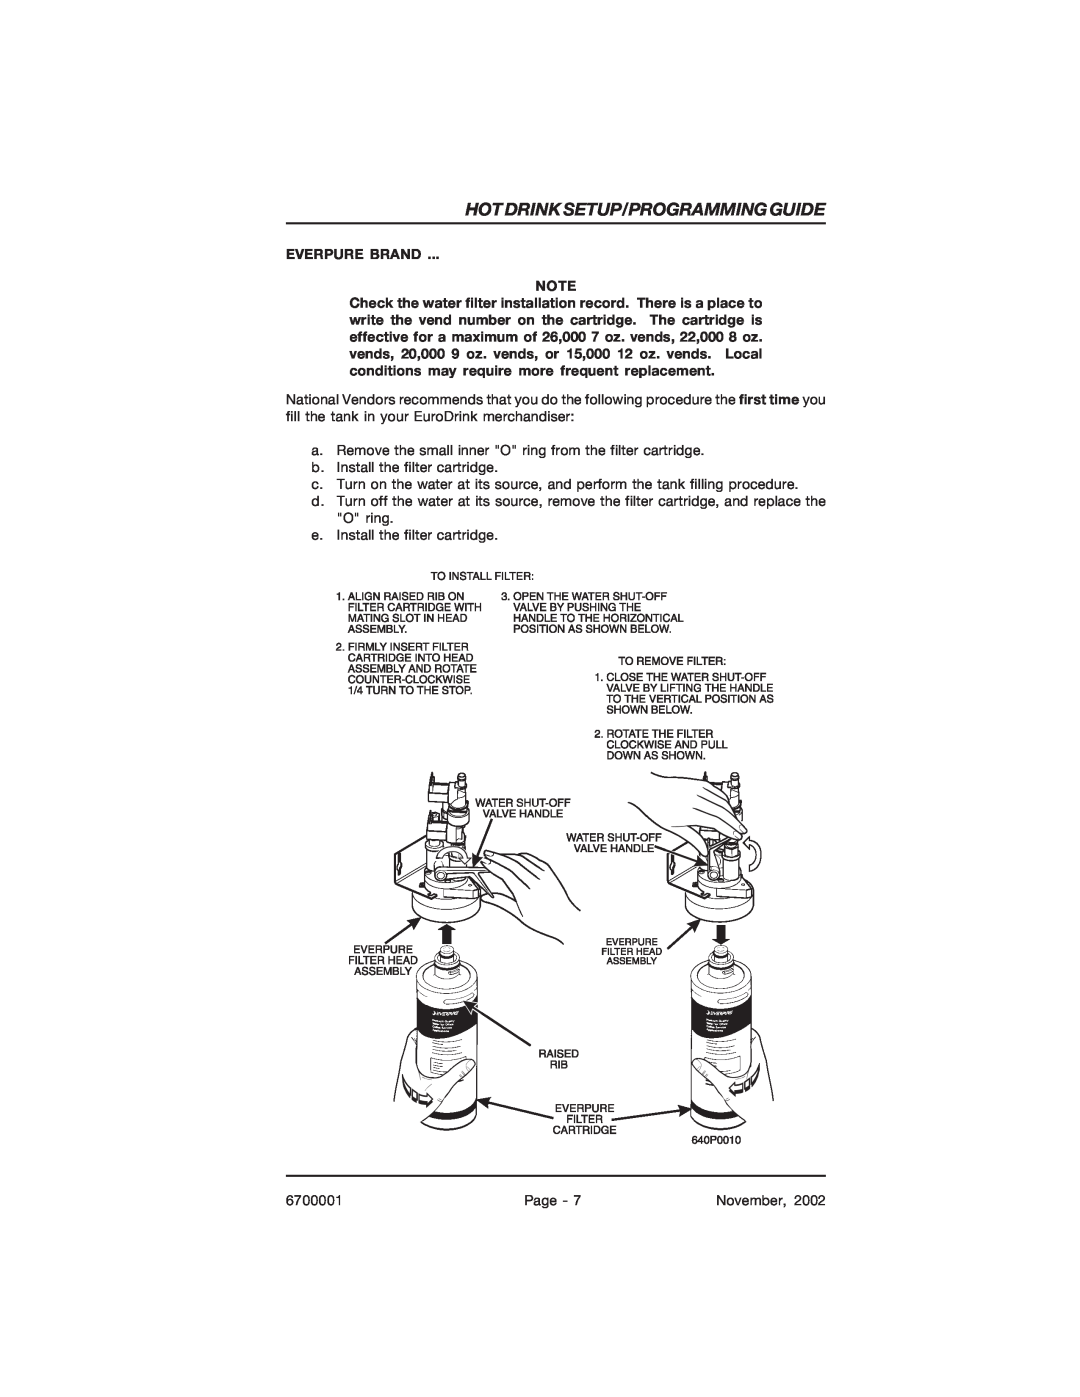 Crane Merchandising Systems 678, 670 manual Hot Drink Setup/Programming Guide, Everpure Brand 